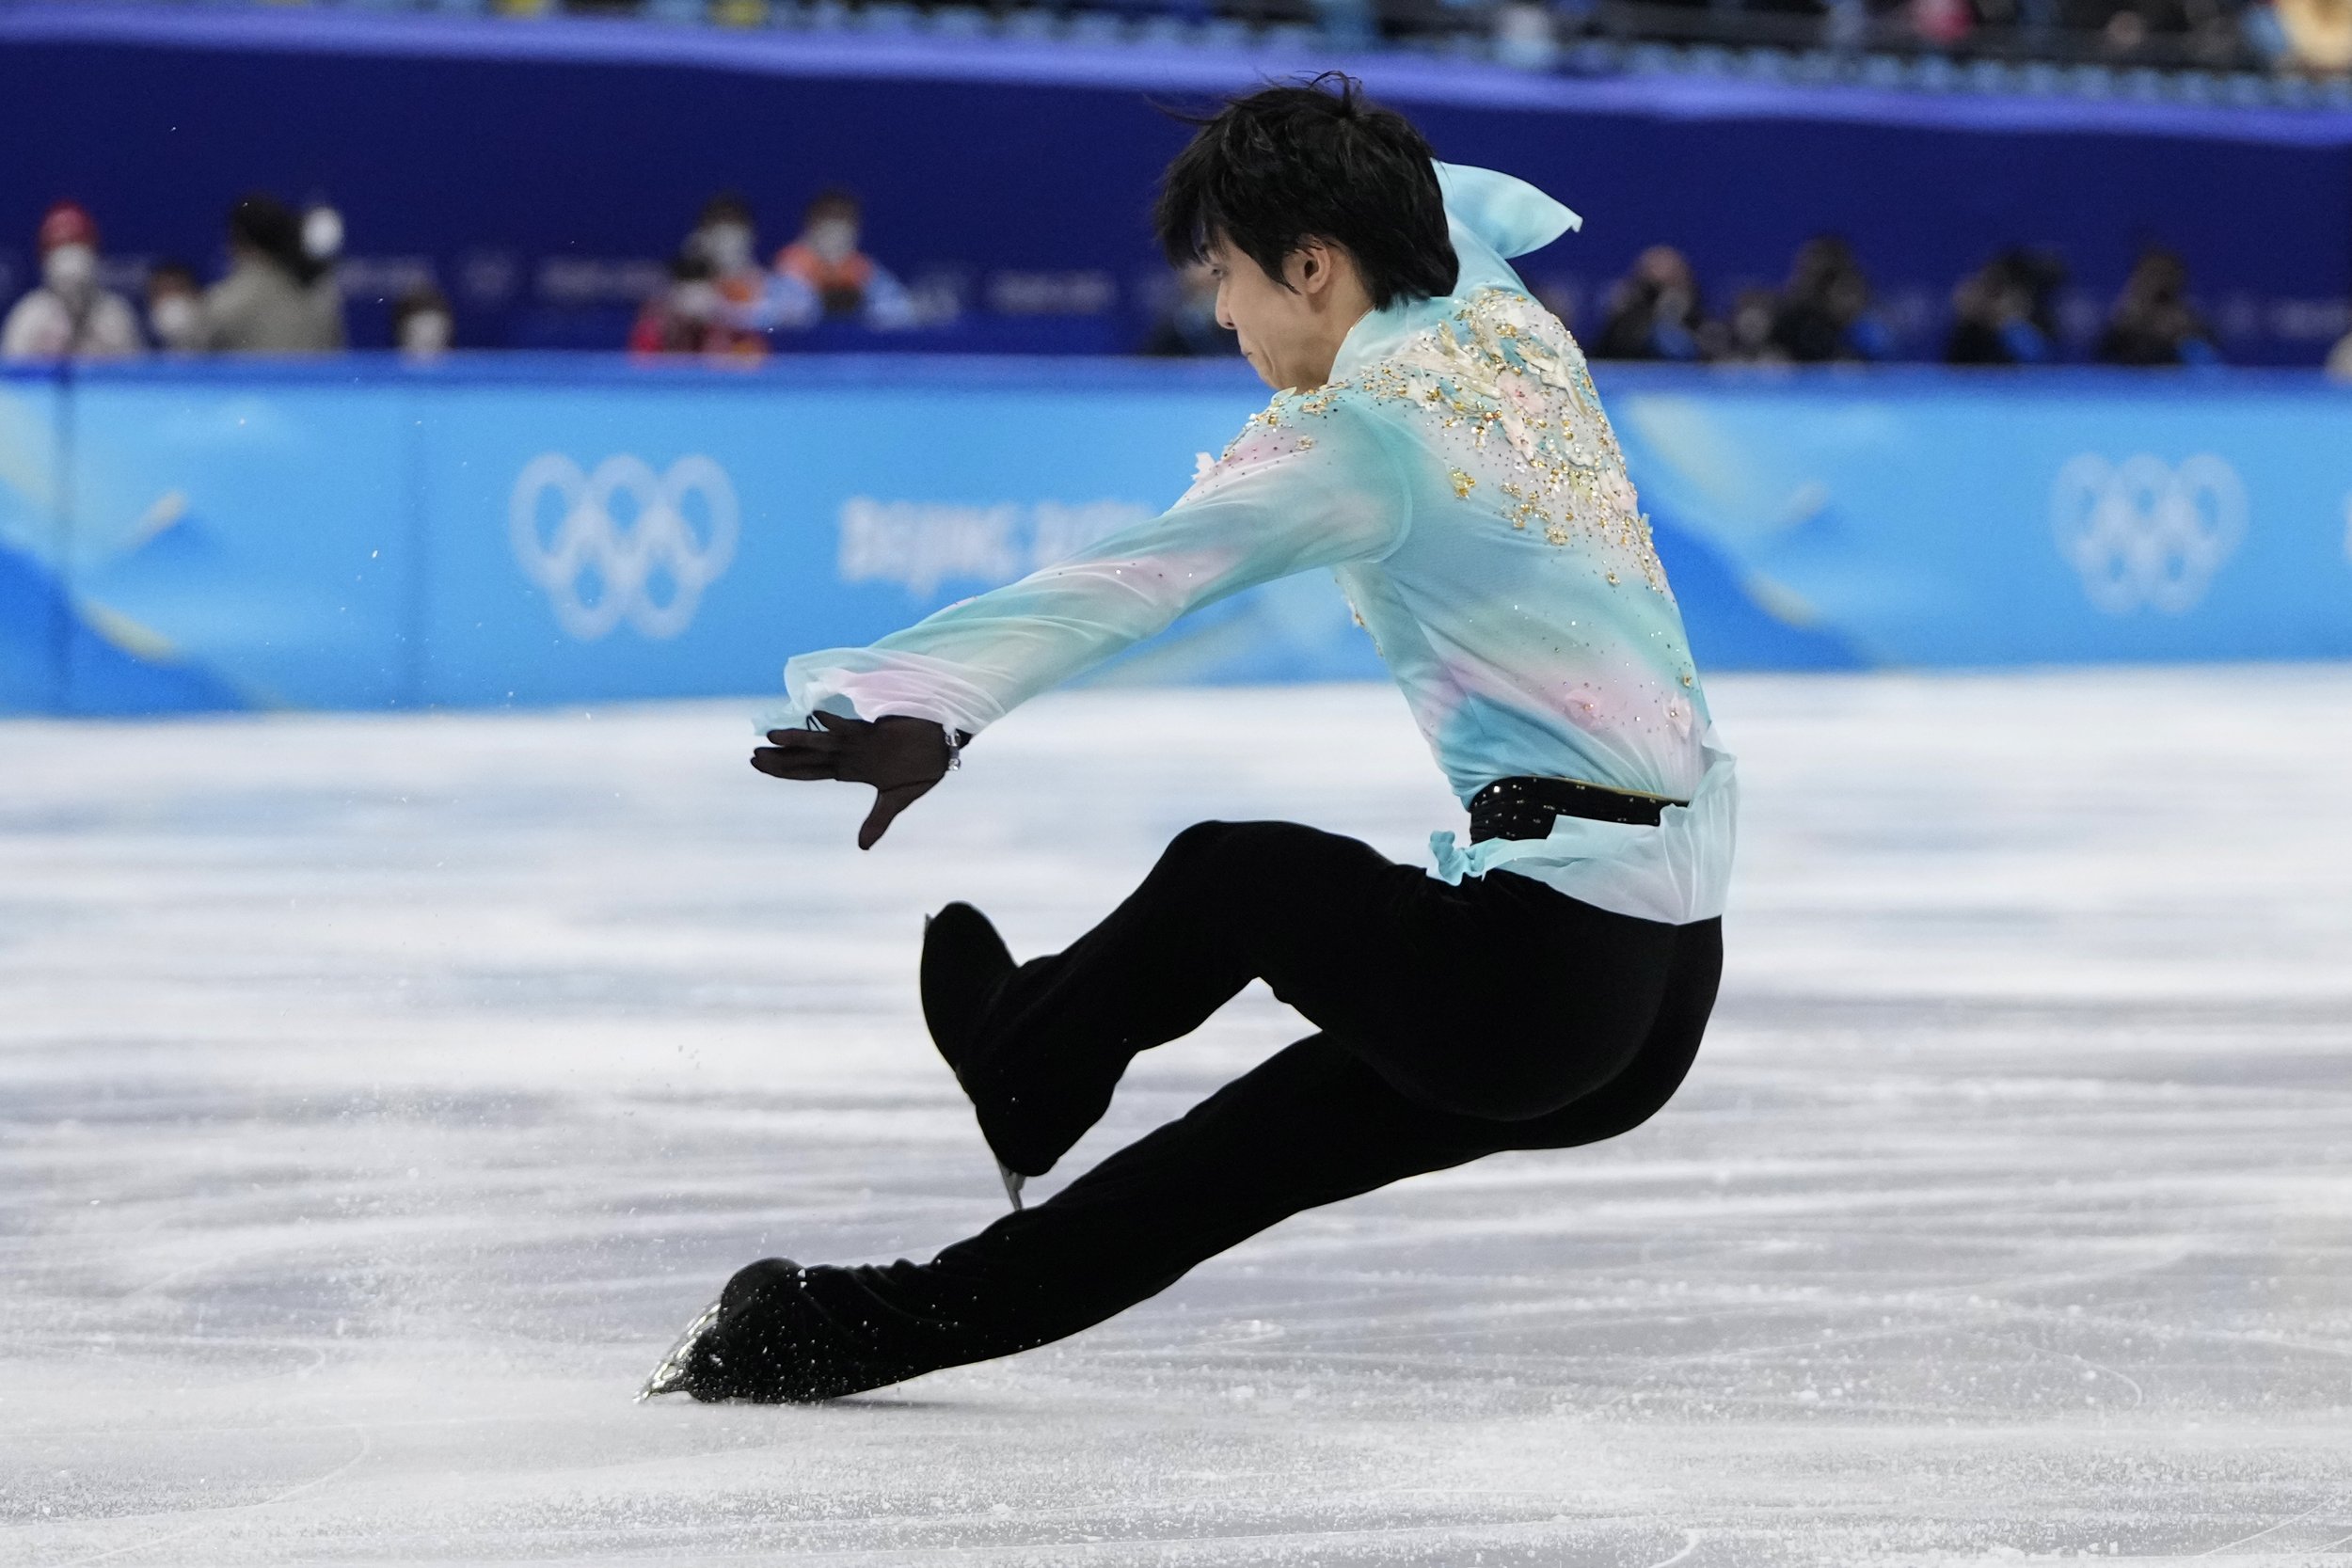  Yuzuru Hanyu, of Japan, falls in the men's free skate program during the figure skating event at the 2022 Winter Olympics, Thursday, Feb. 10, 2022, in Beijing. (AP Photo/Natacha Pisarenko) 